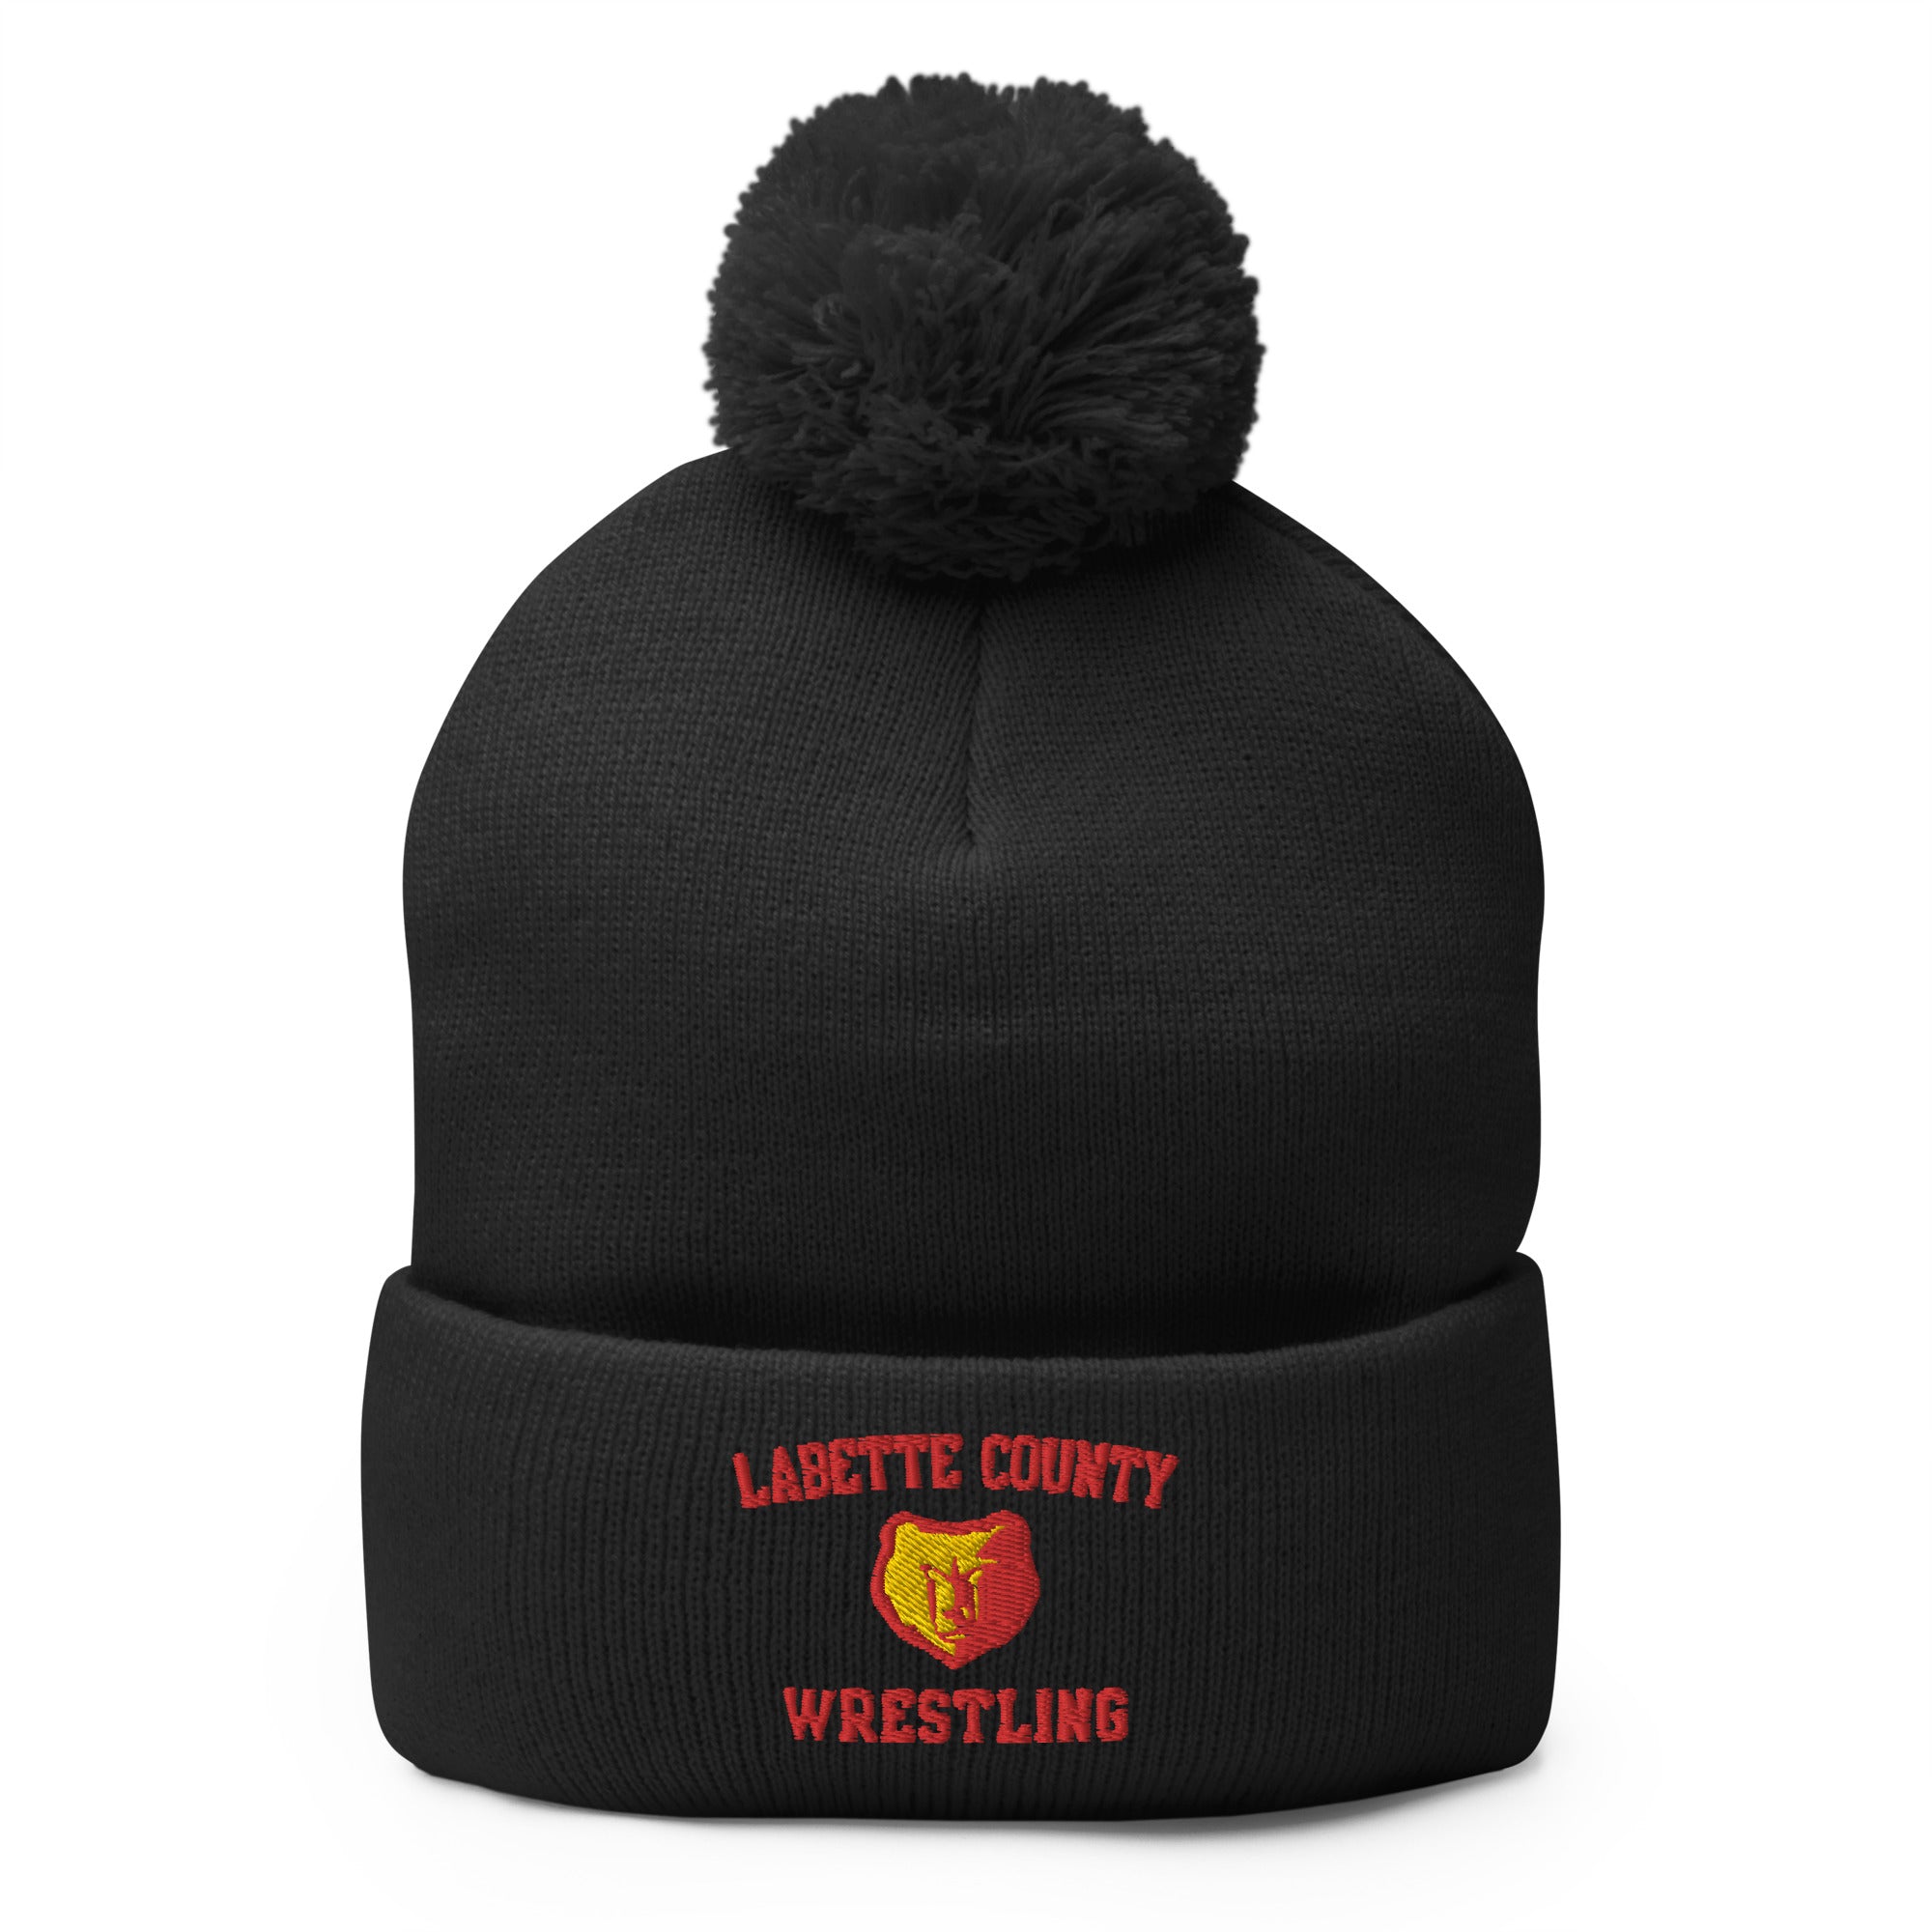 Labette County Wrestling Pom-Pom Knit Cap